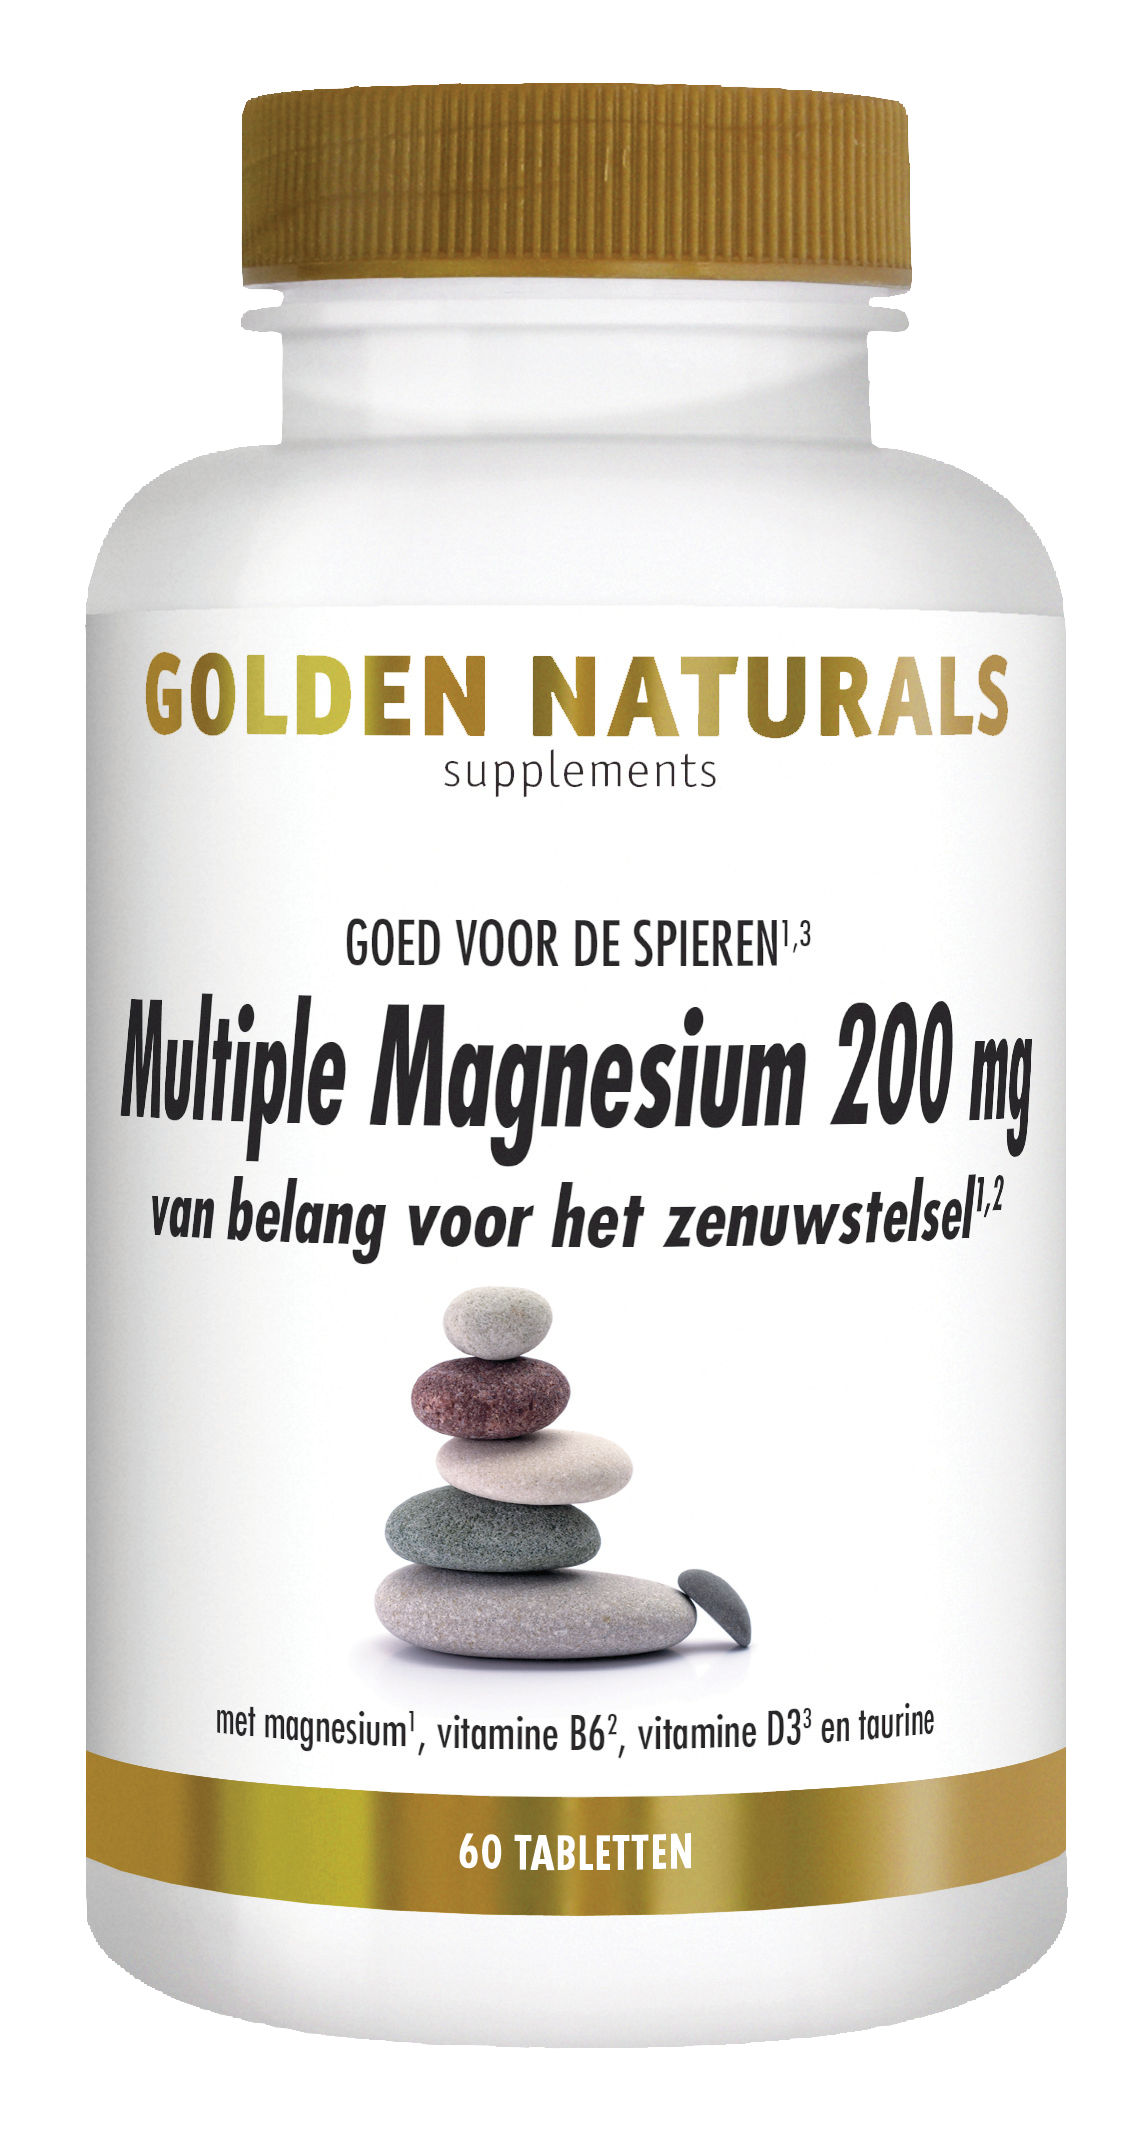 Inspecteur Sui Oproepen Golden Naturals Multiple Magnesium 200 mg kopen? - GoldenNaturals.nl